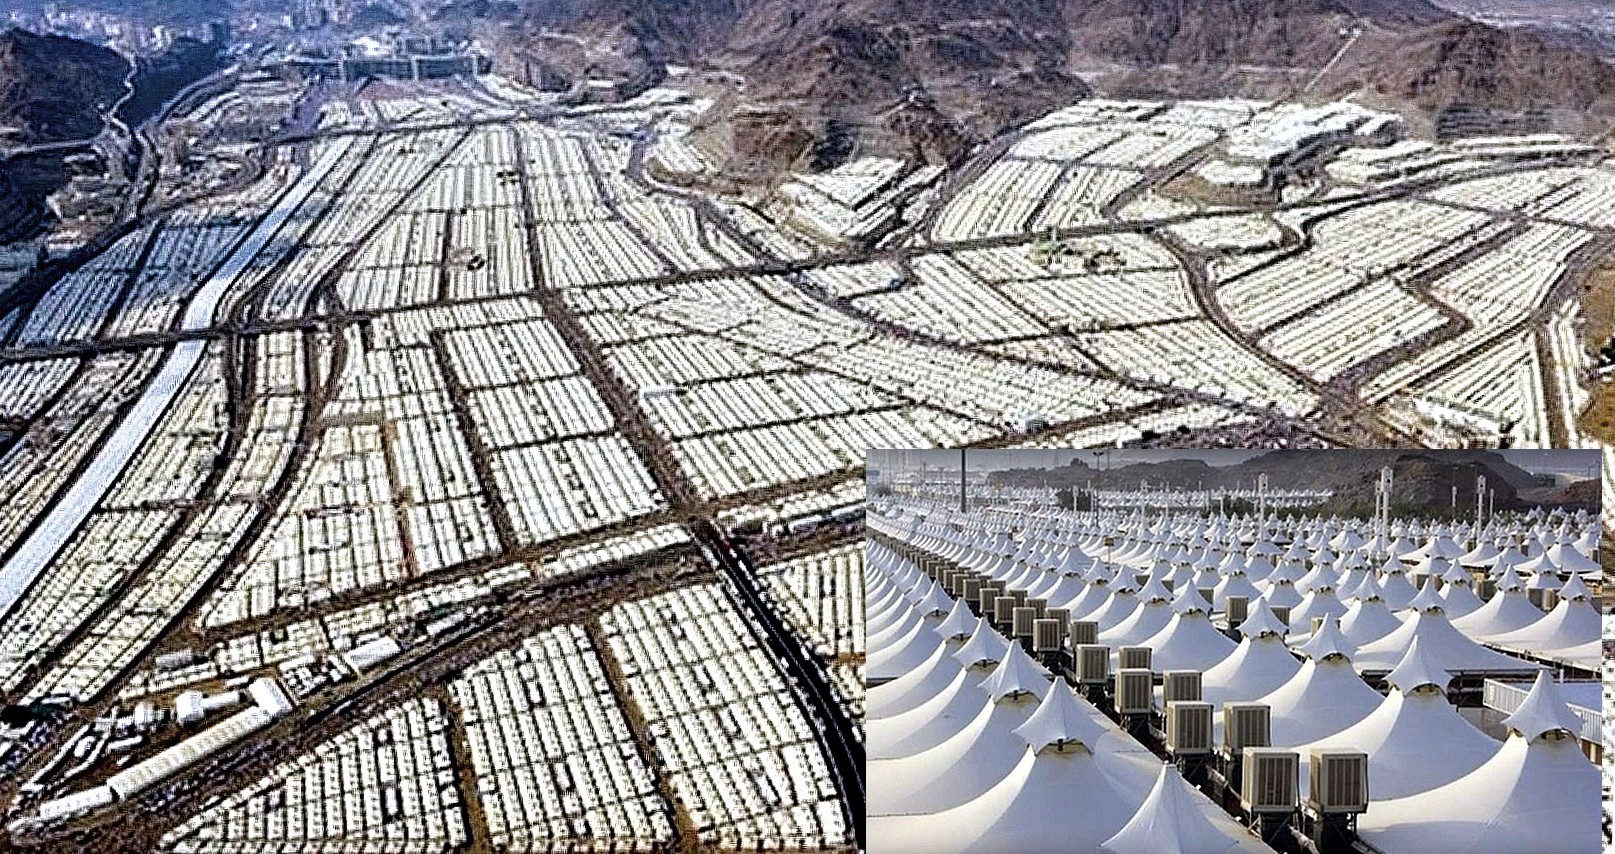 Saudi-Arabiens Zeltstadt könnte 3 Mio. Flüchtlinge aufnehmen